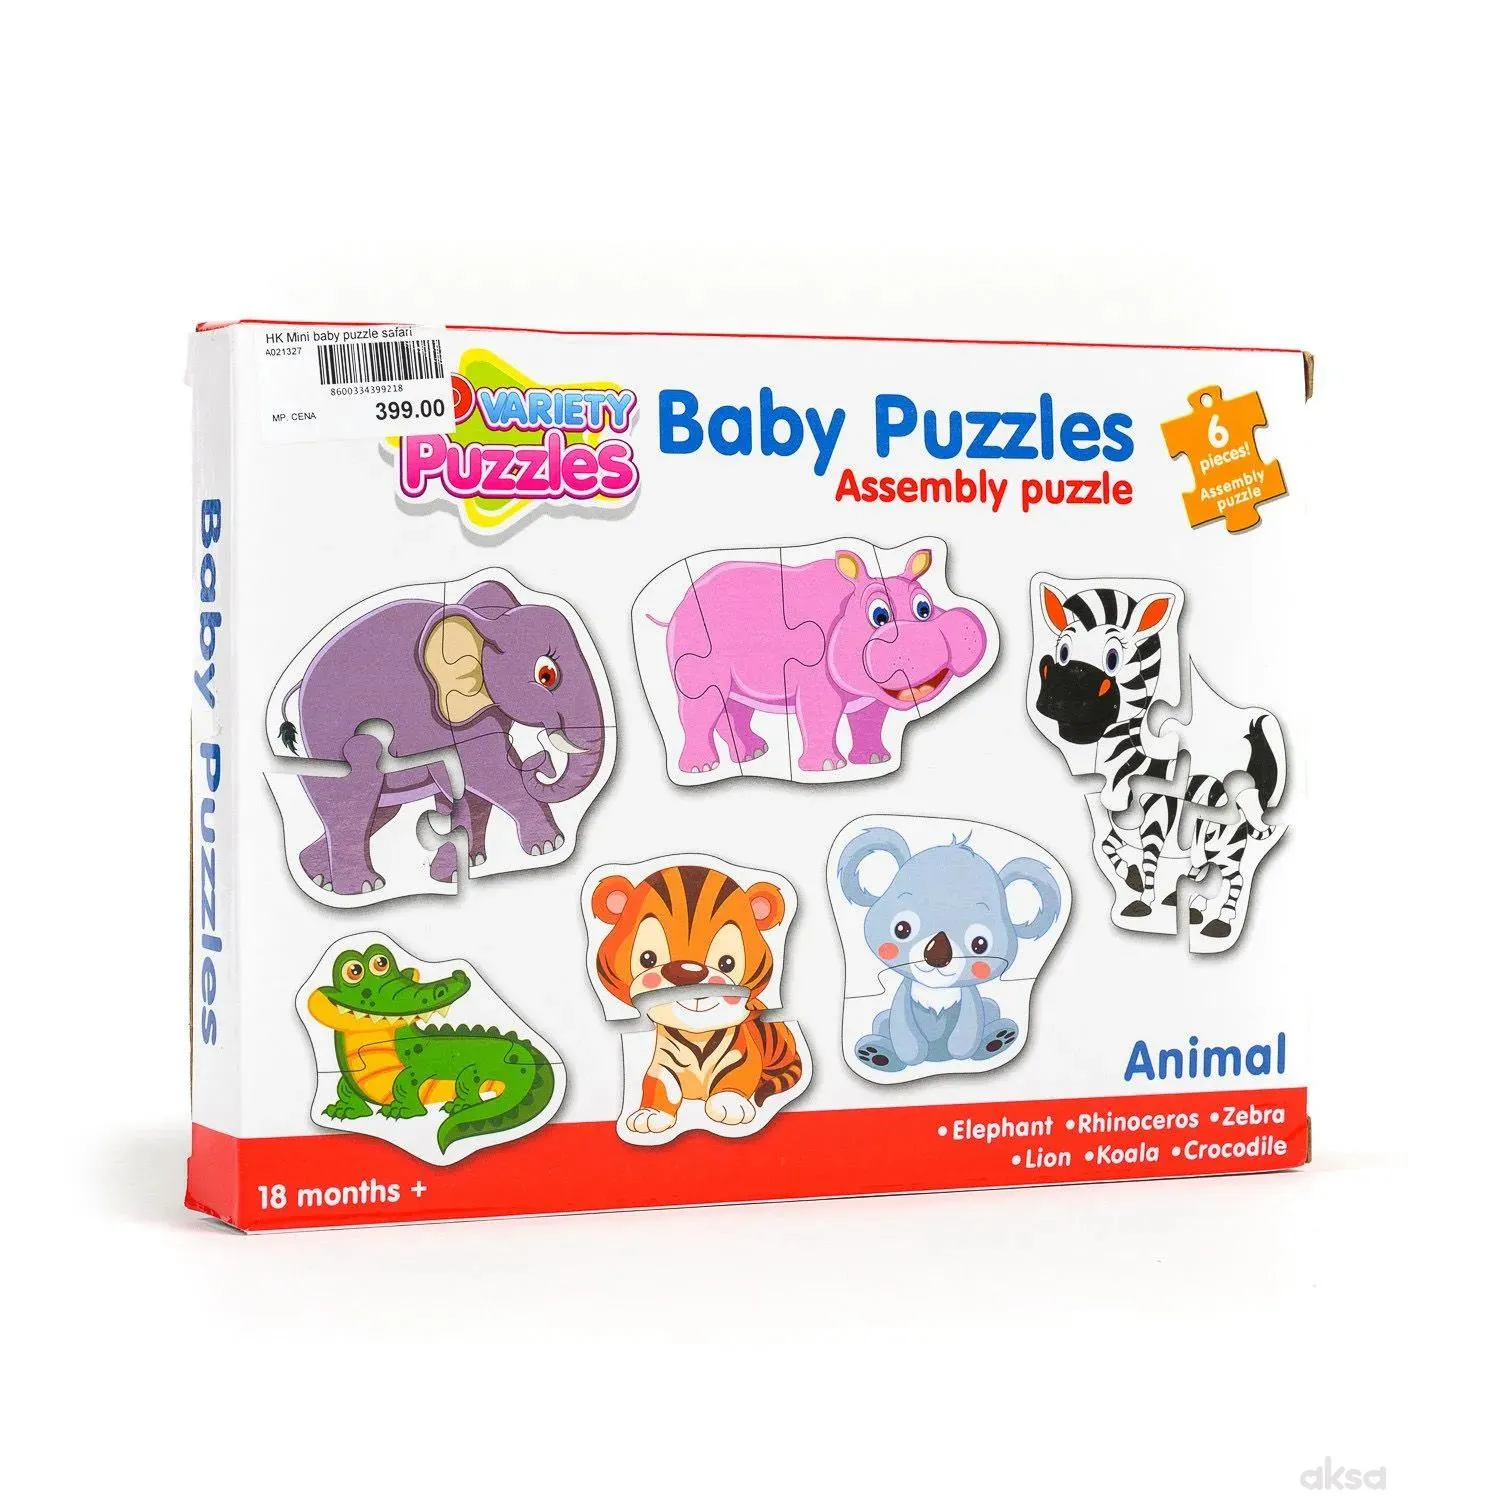 HK Mini baby puzzle safari 